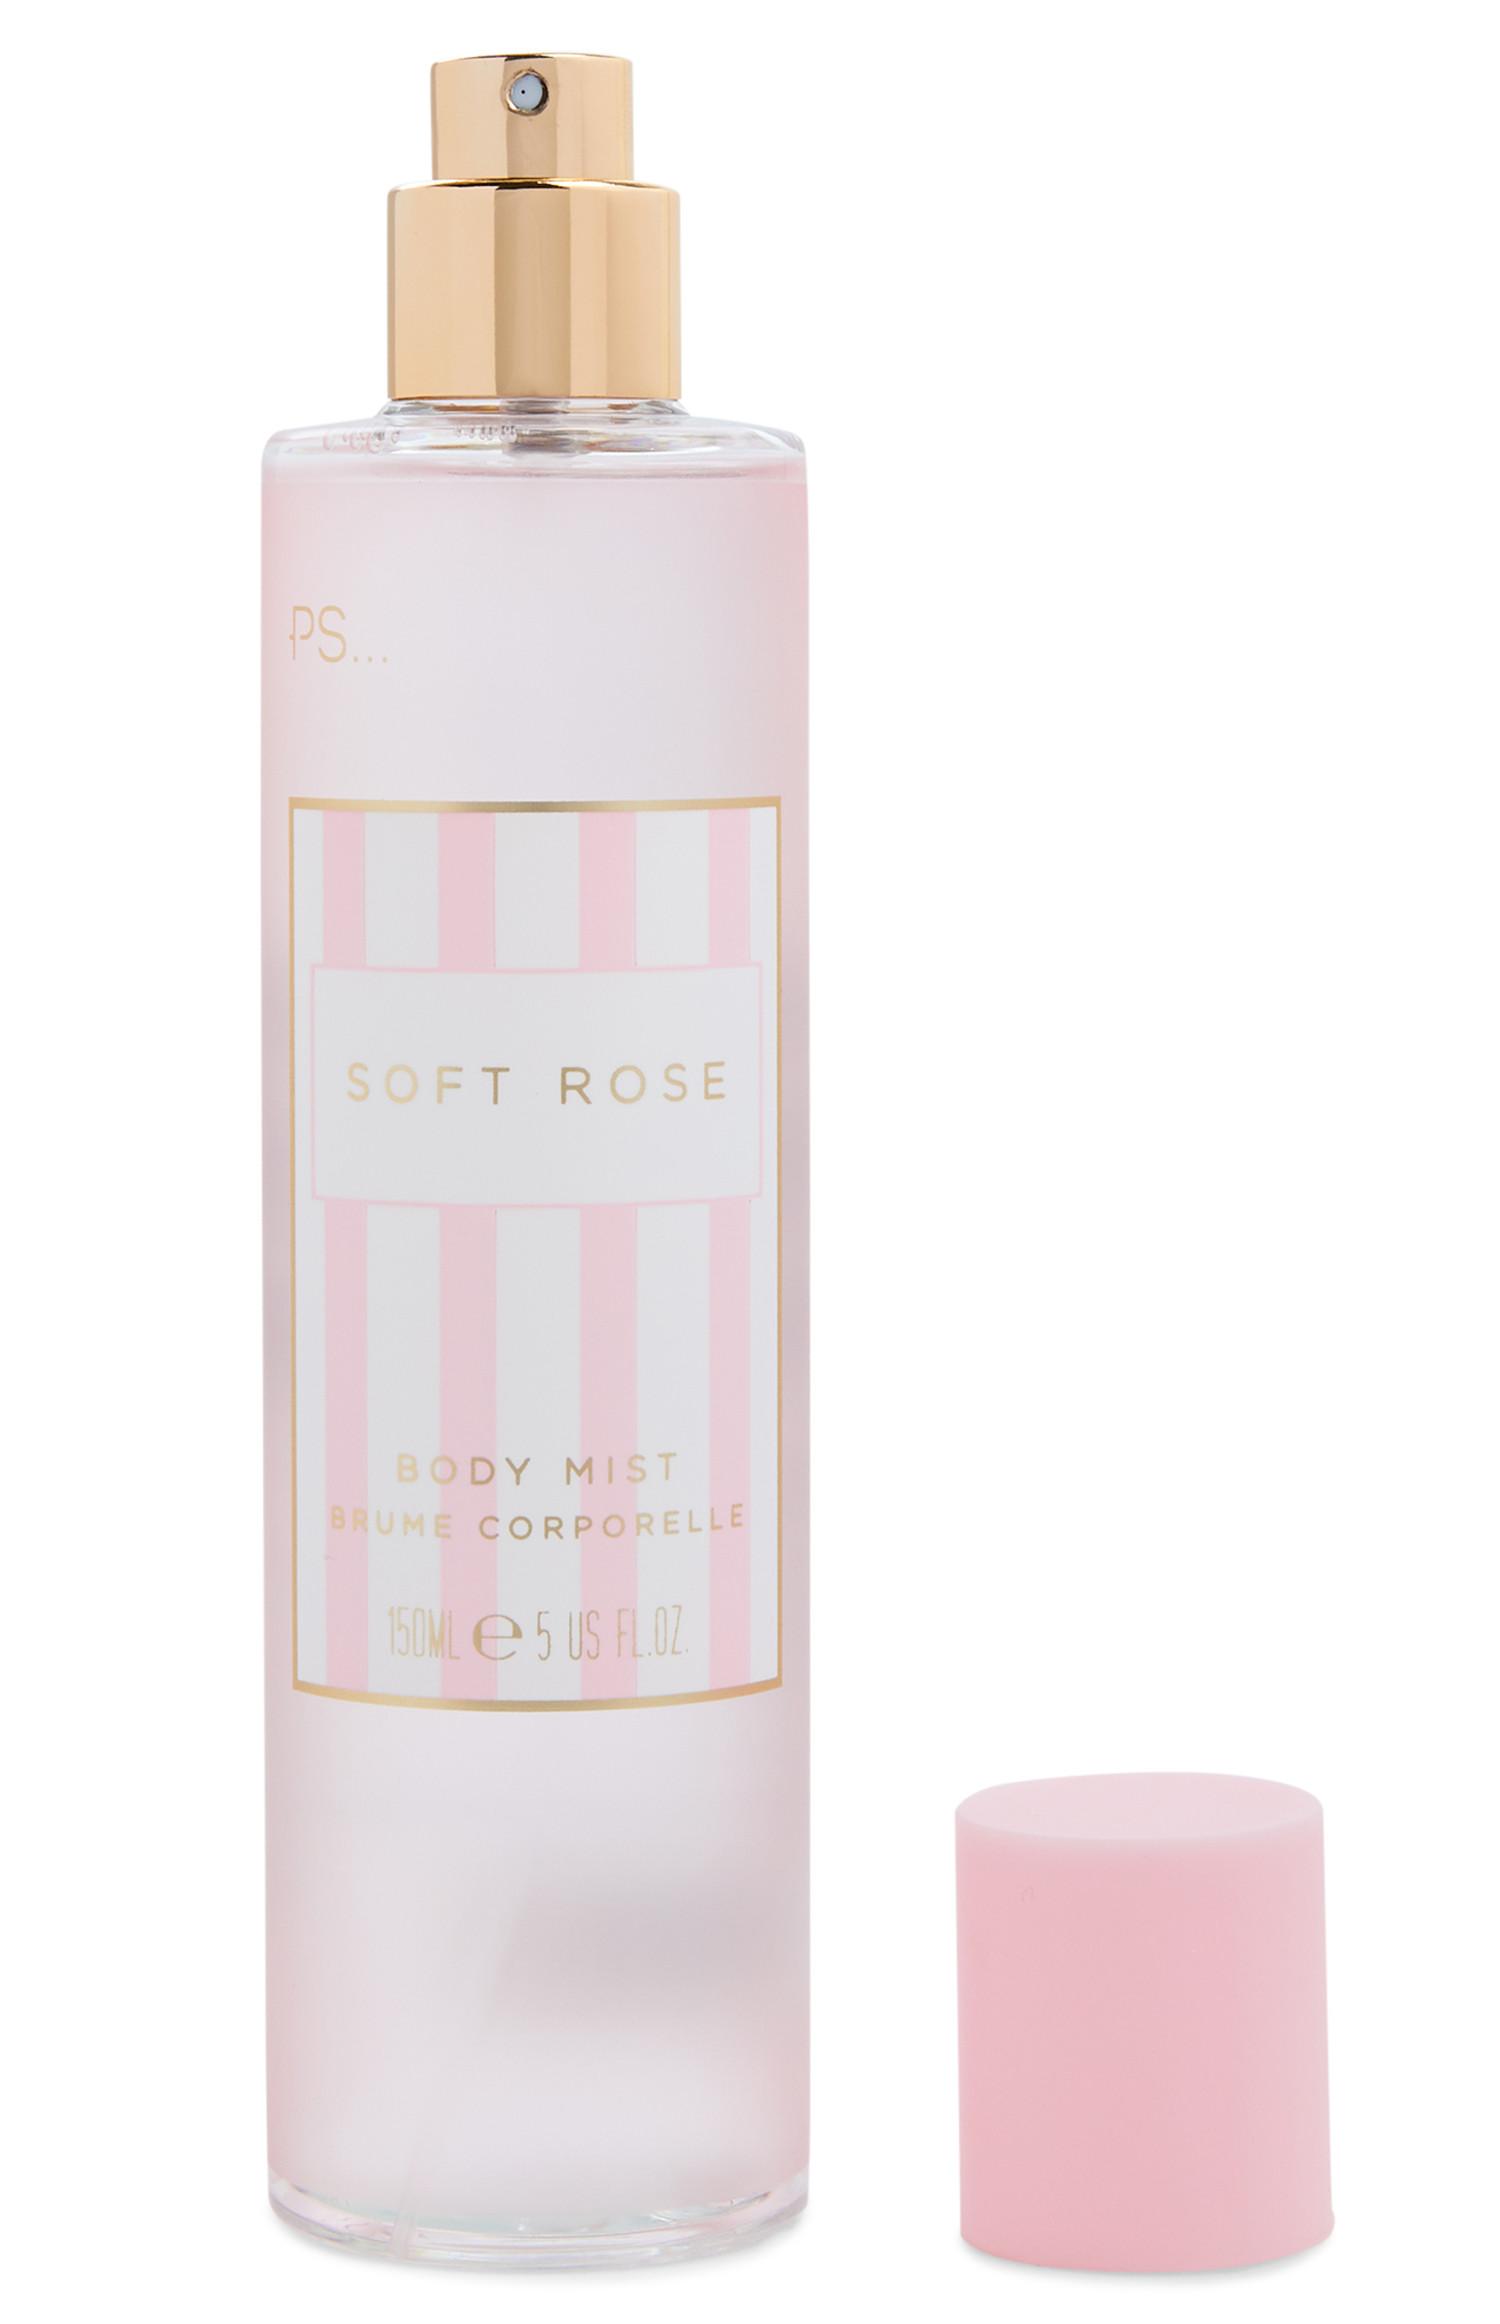 Soft Rose 150ml Body Mist | Women's Fragrance: Perfumes \u0026 Body Mists |  Makeup Sets \u0026 Beauty Products | Makeup \u0026 Cosmetics | All Primark Products |  Primark UK